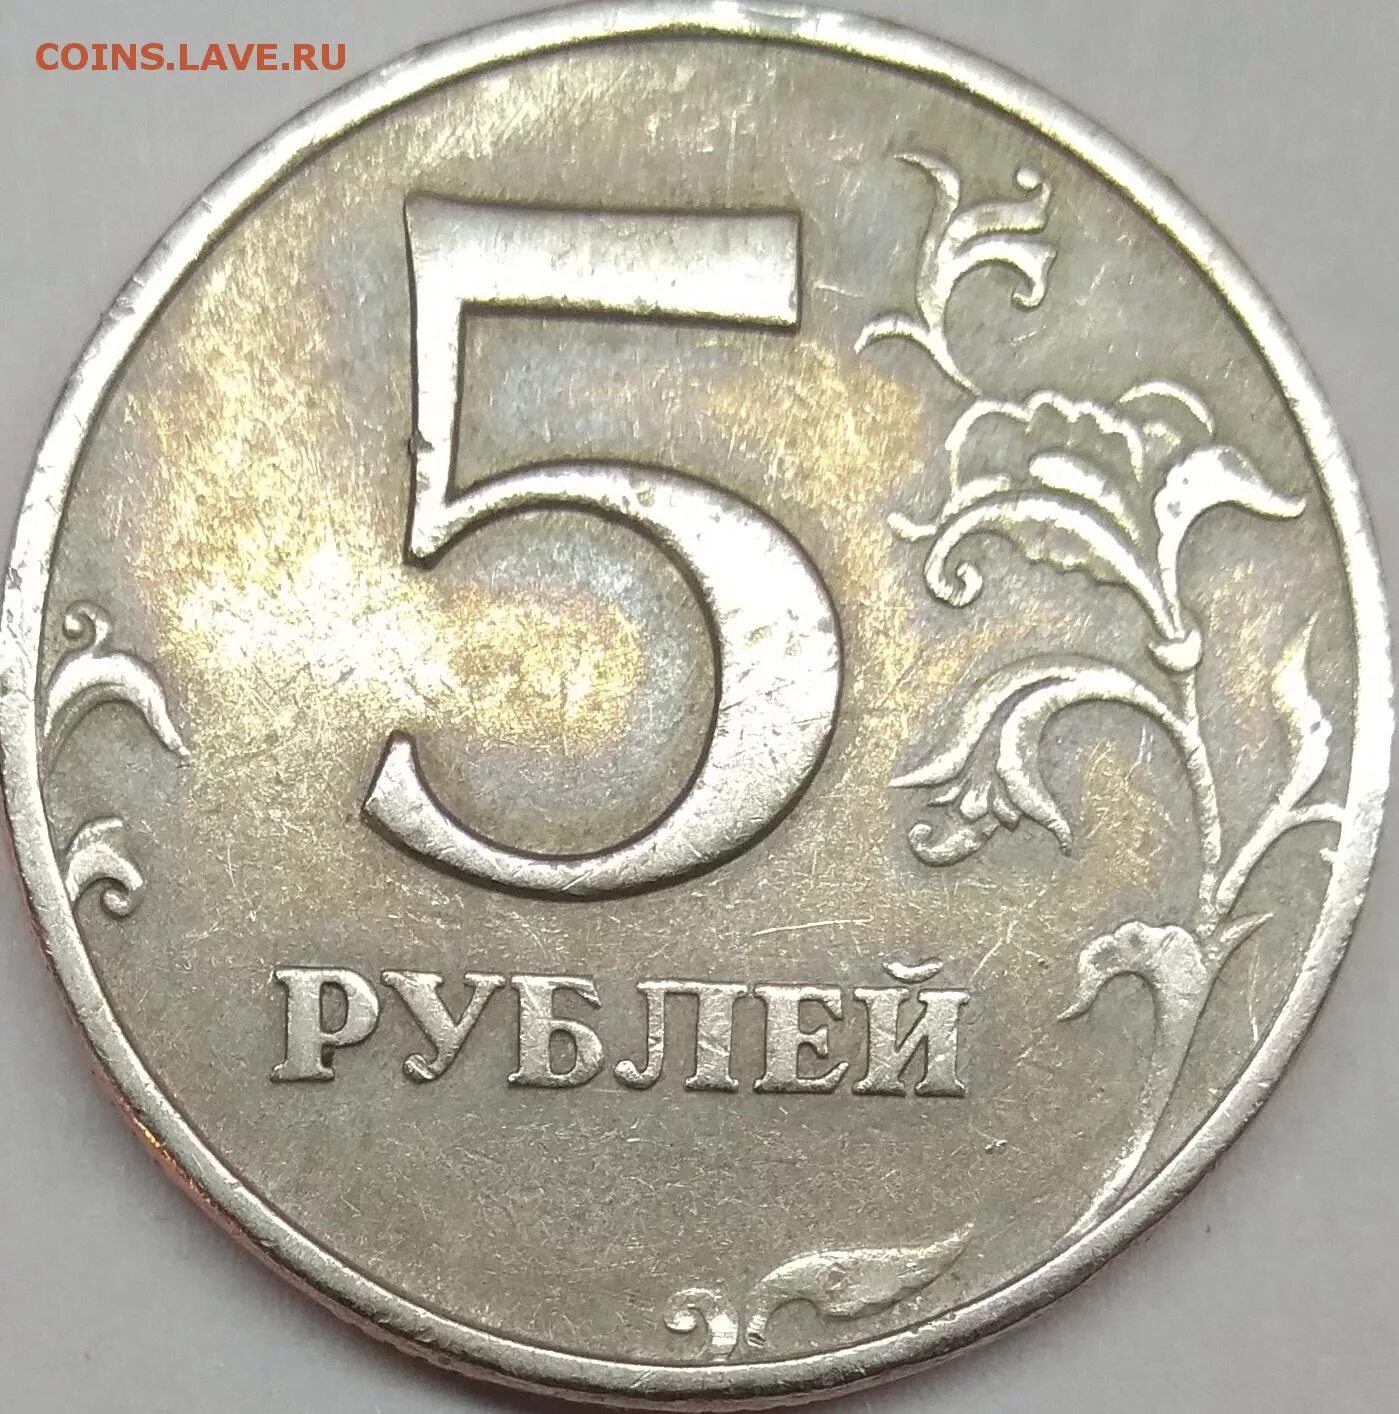 5 рублей ммд. ММД монеты 1997-1998. 5 Рублей 1997 ММД. Монета 5 рублей 1997 ММД. 5 Рублей 1997 ММД Медно-алюминиевая.